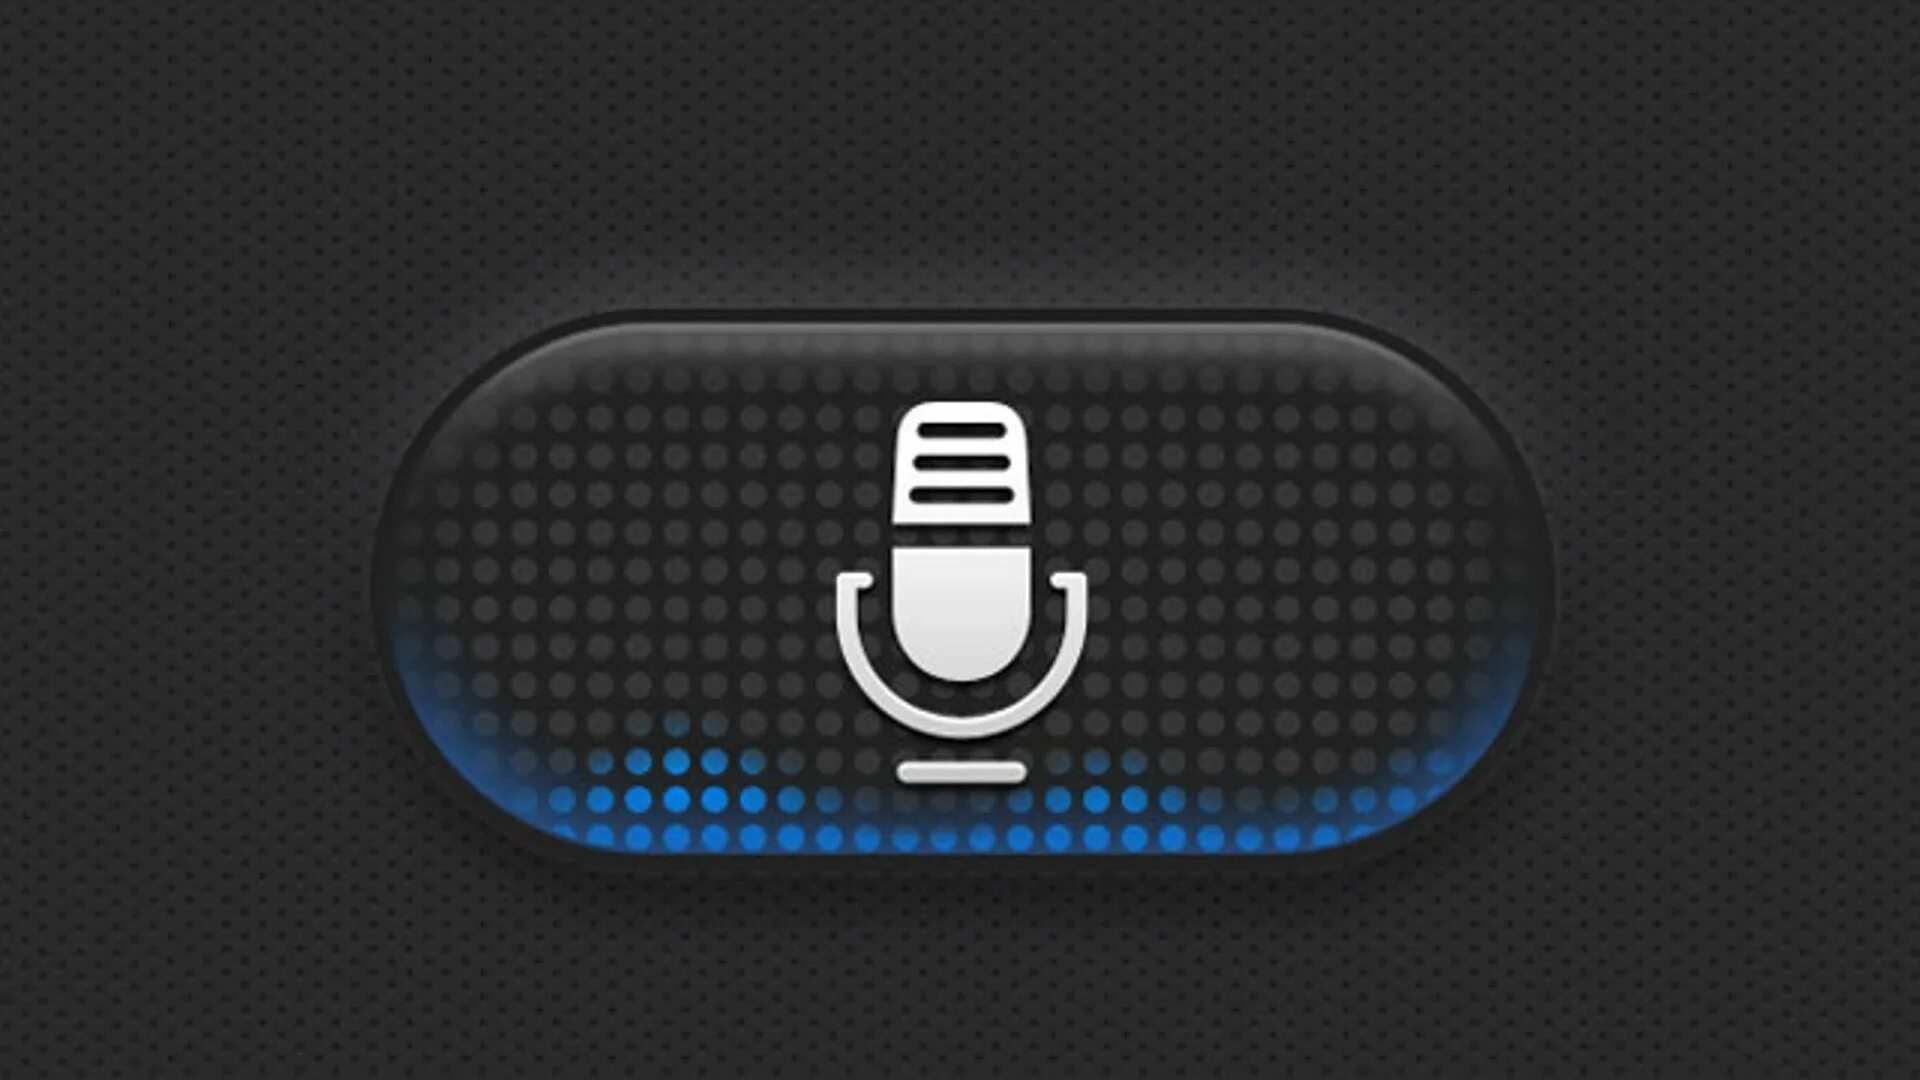 S Voice. Картинка s Voice. The Voice mag logo. Samsung icon. Samsung voice